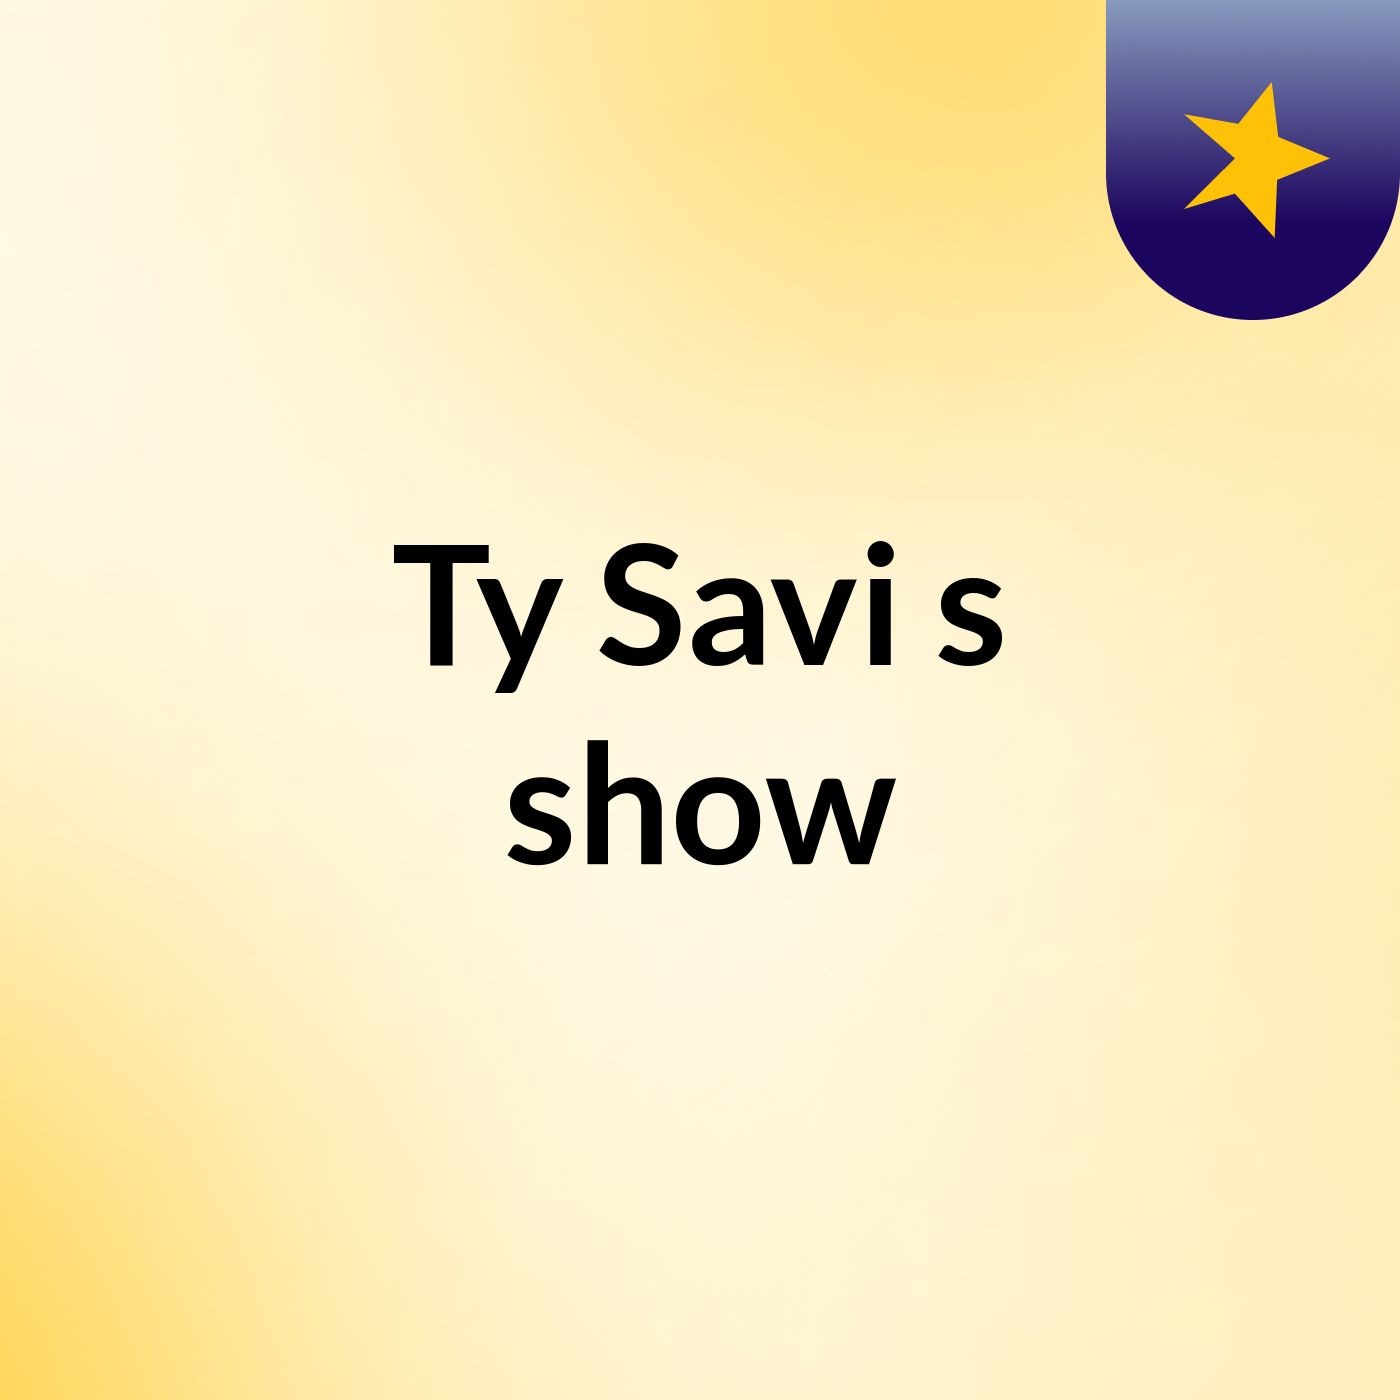 Ty Savi's show